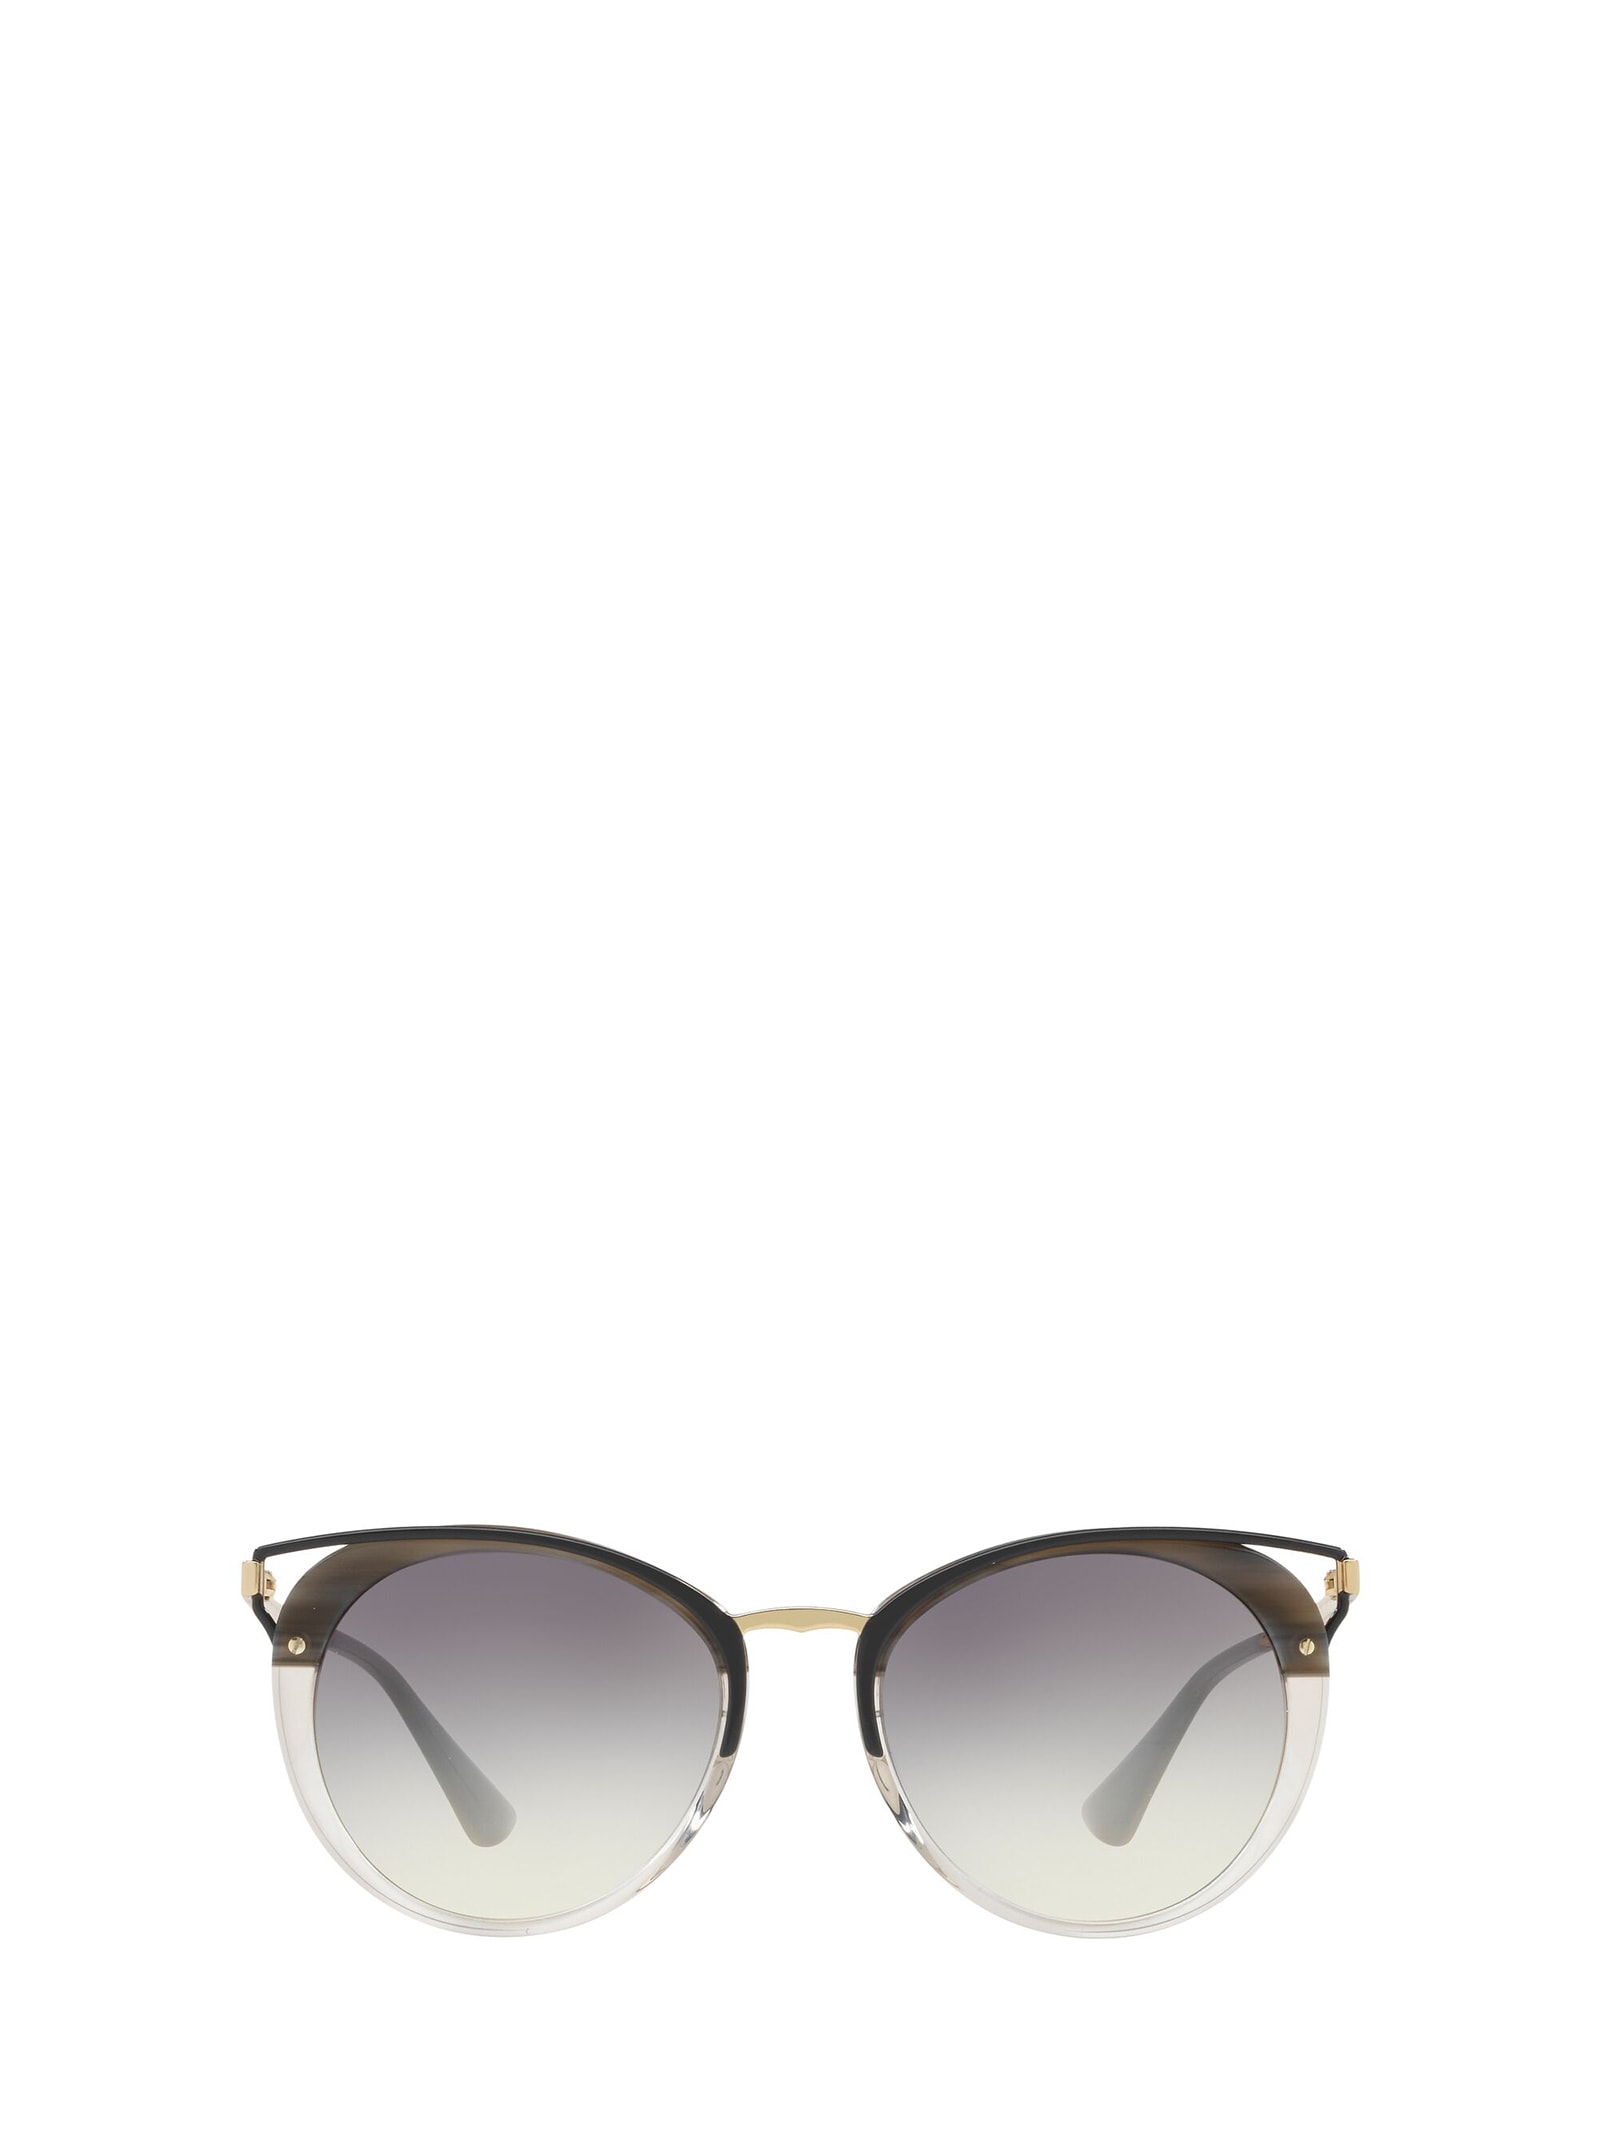 Prada Prada Pr 66ts Striped Grey Sunglasses